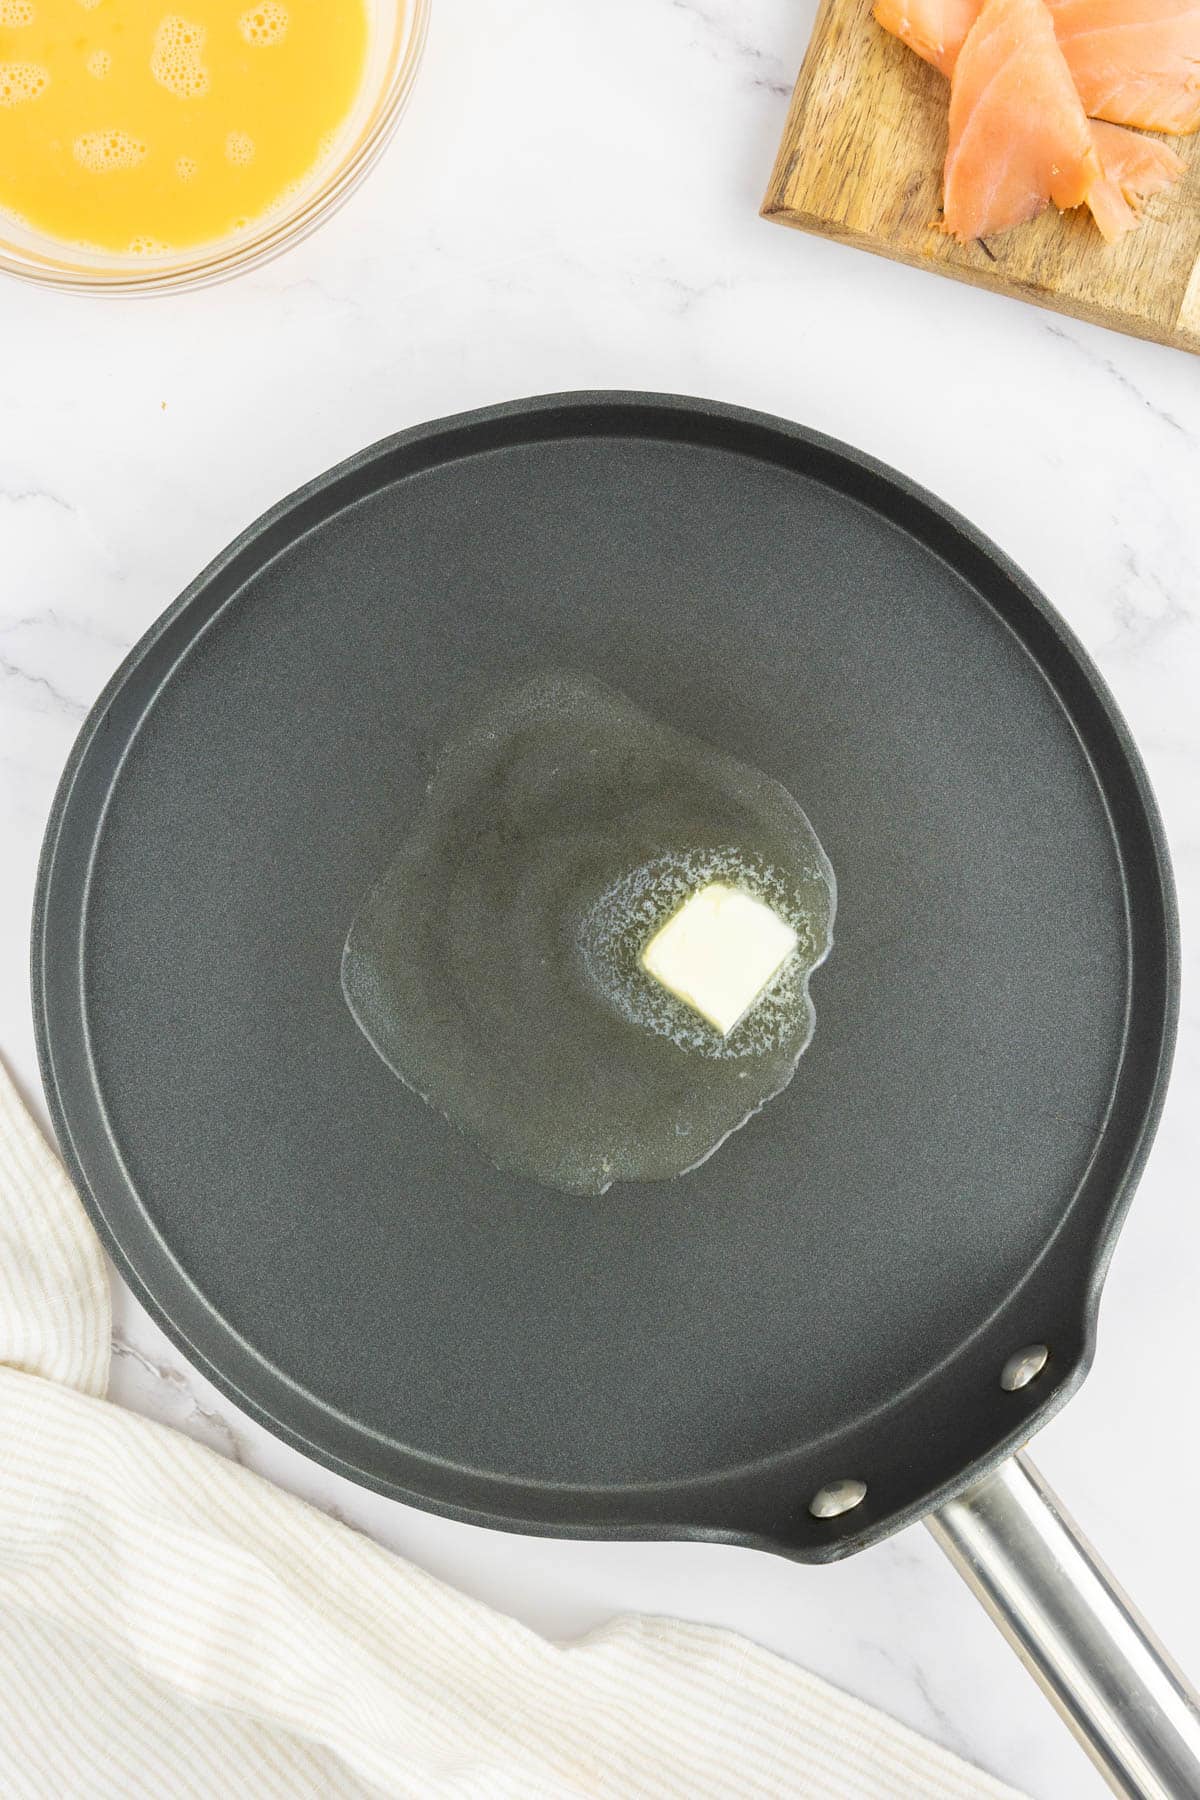 Butter melting on a saute pan